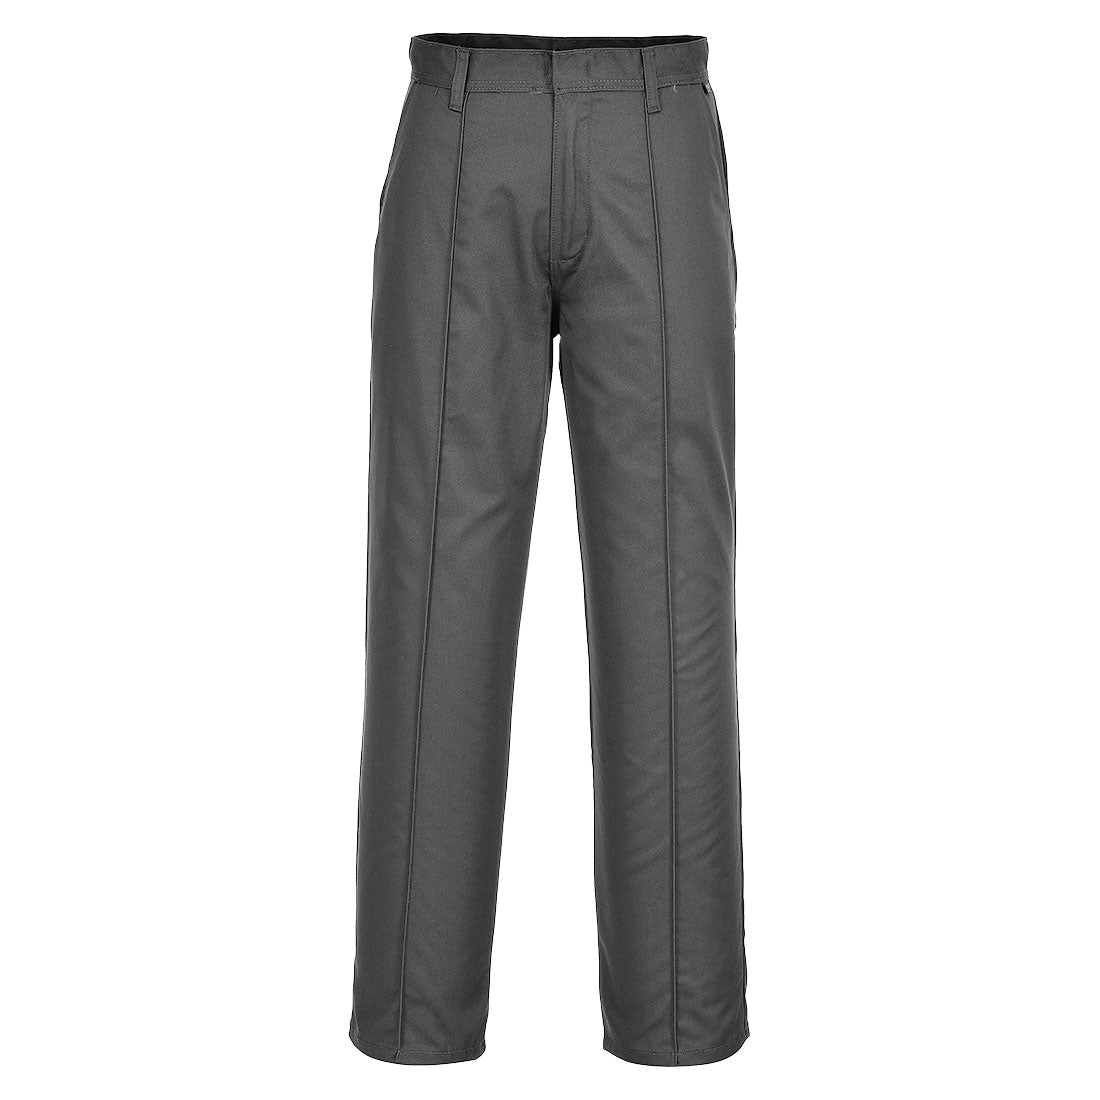 Portwest 2885 - Graphite Grey Preston Mens Work Trousers with Side Pockets sz 30" Regular